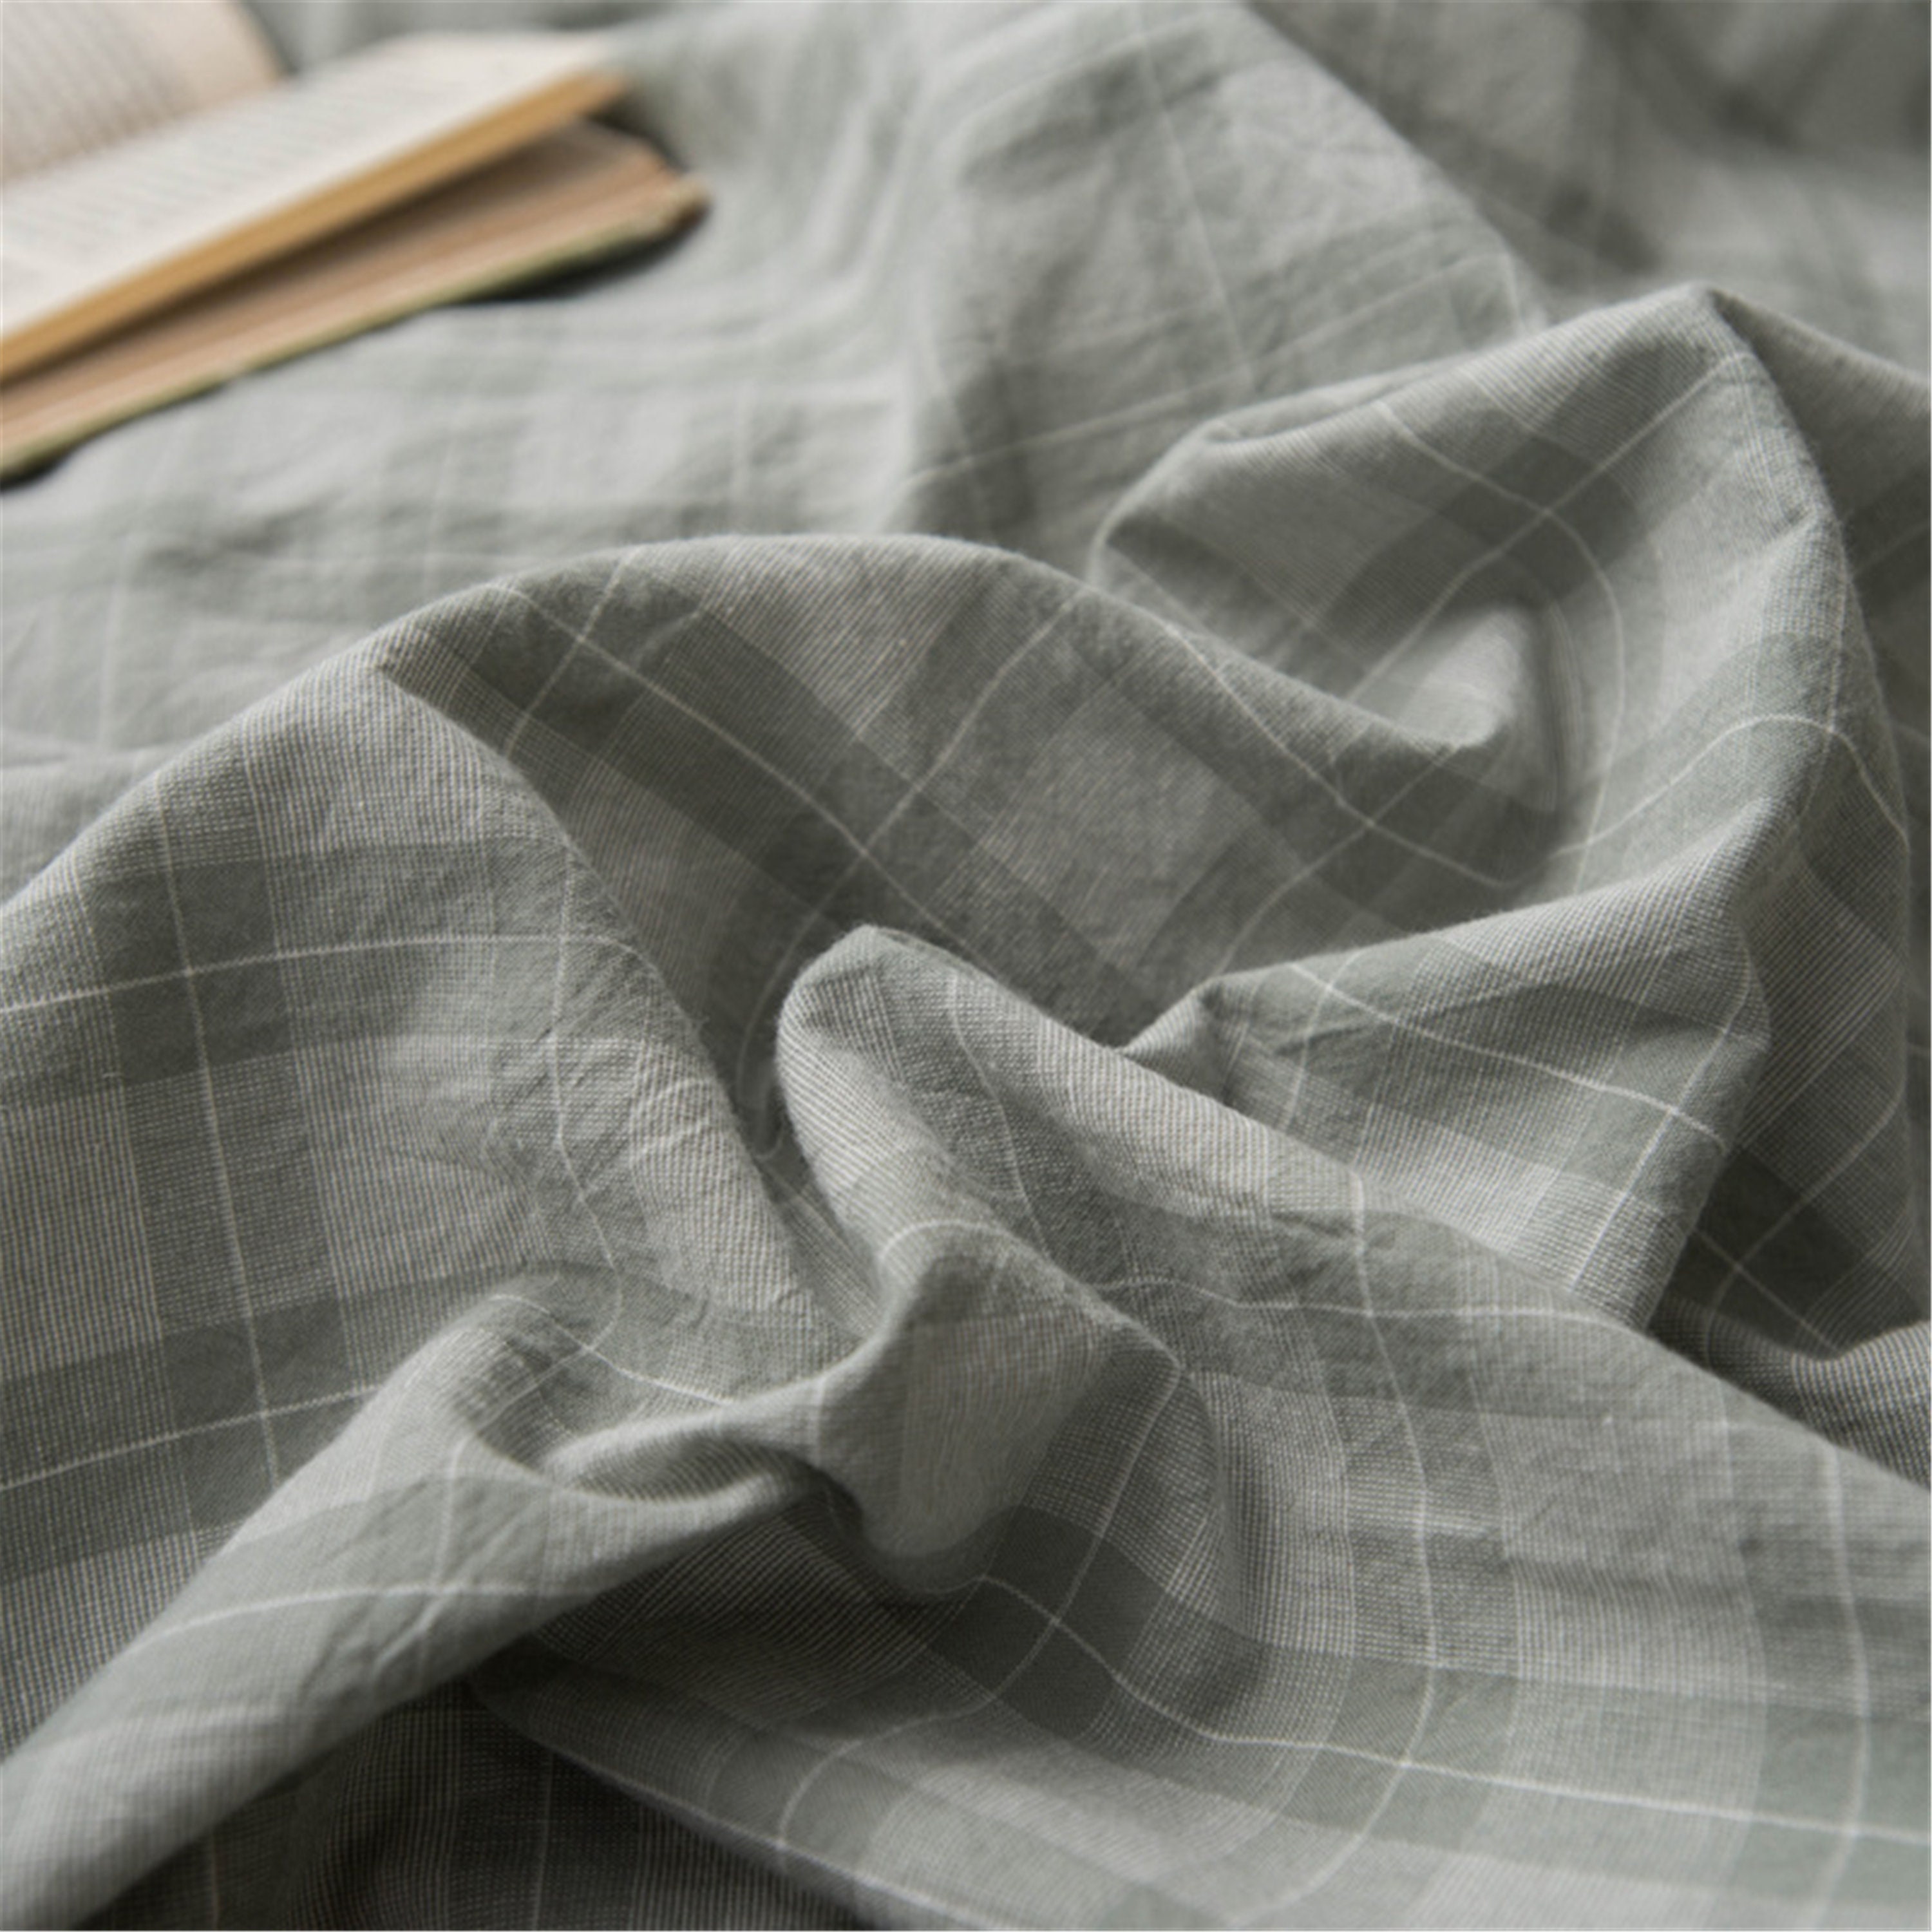 Checkered grey-green duvet cover. Summer cotton bedding. Duvet | Etsy